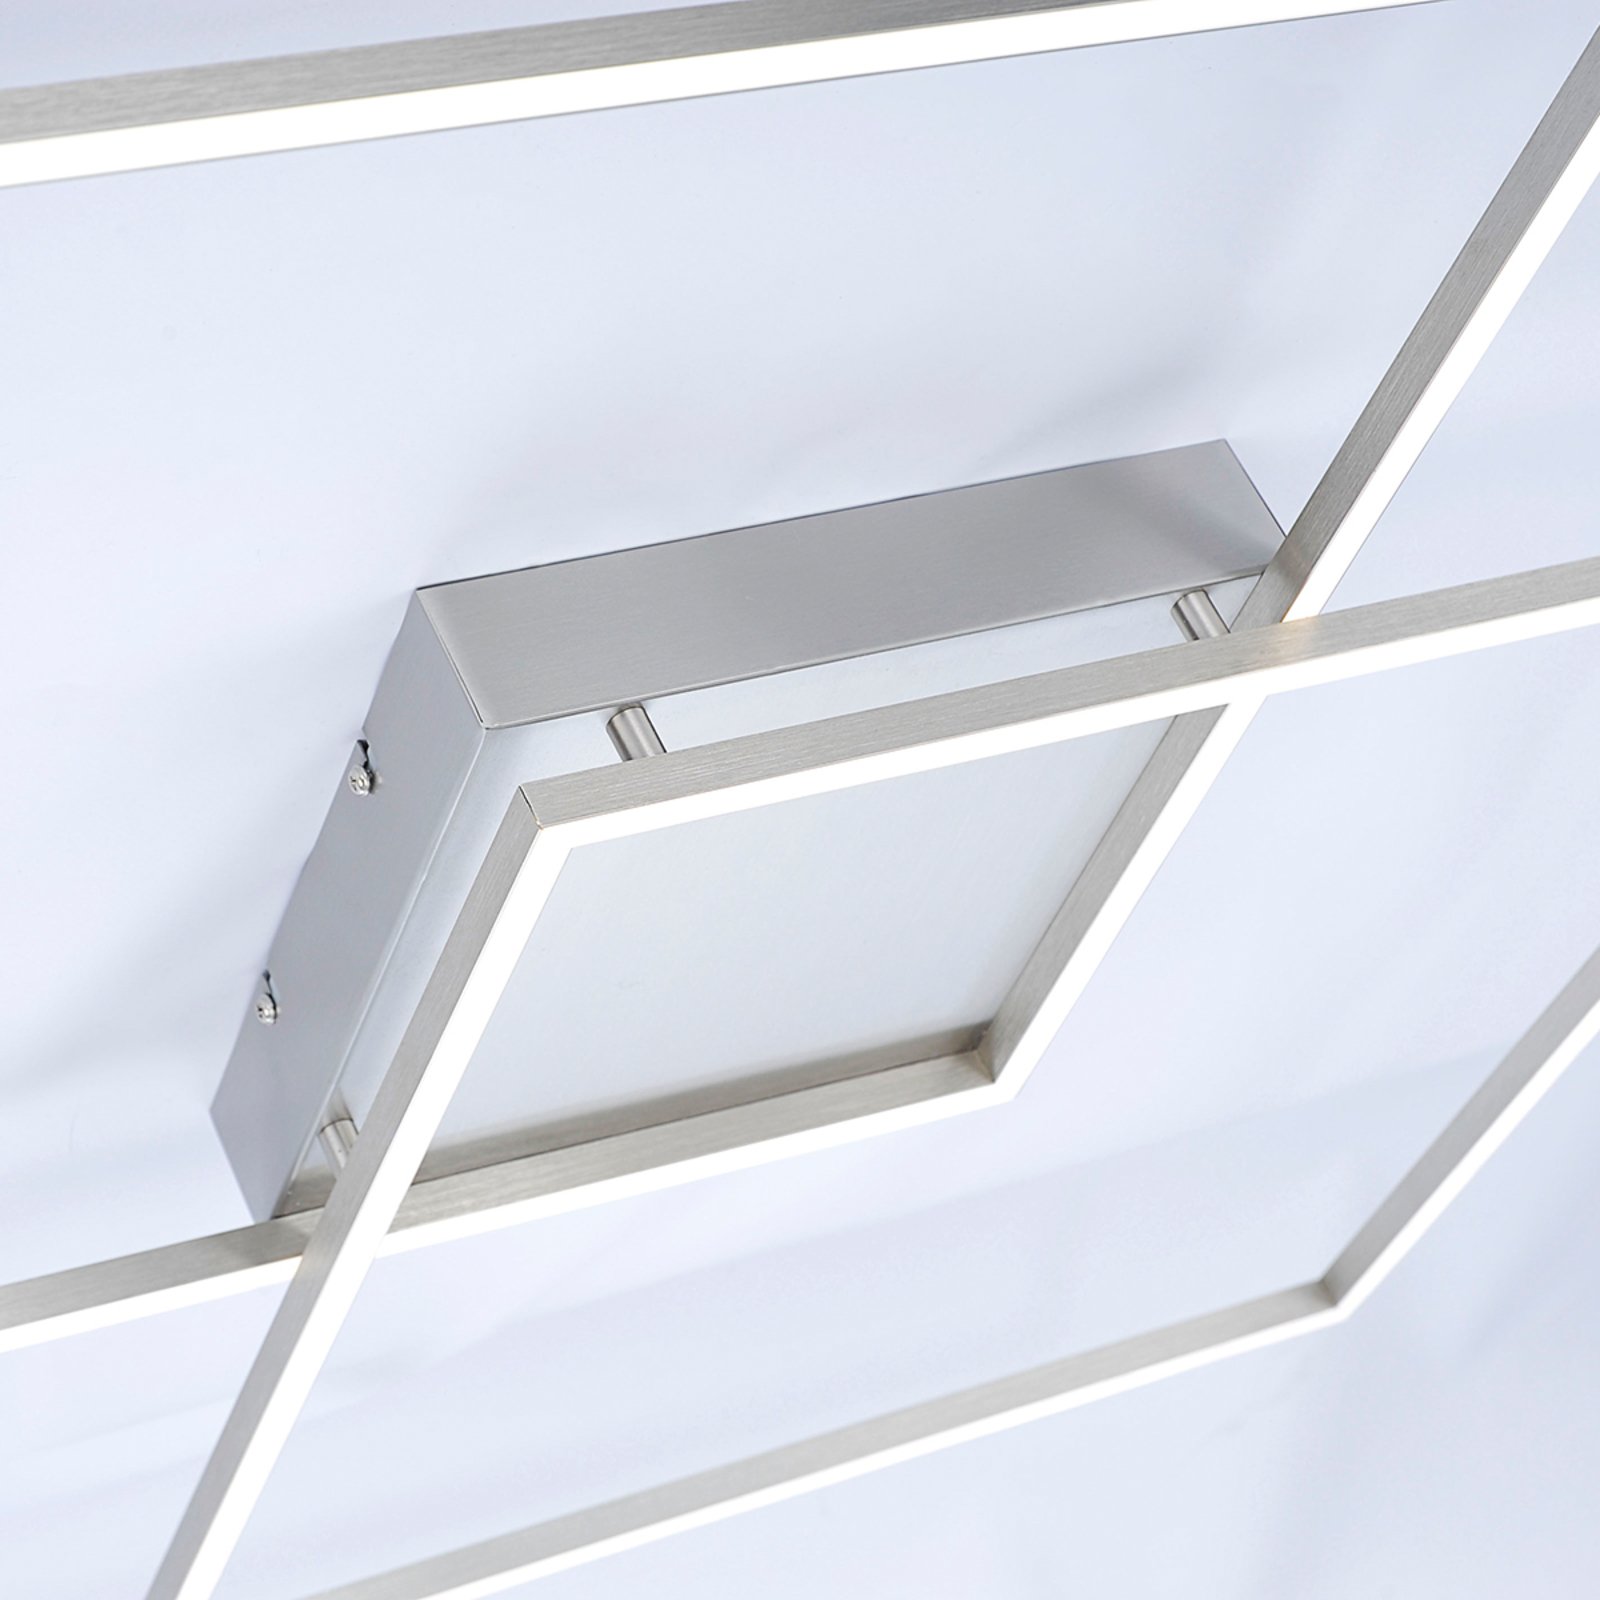 Inigo - LED plafondlamp met afstandsbed. 68 cm